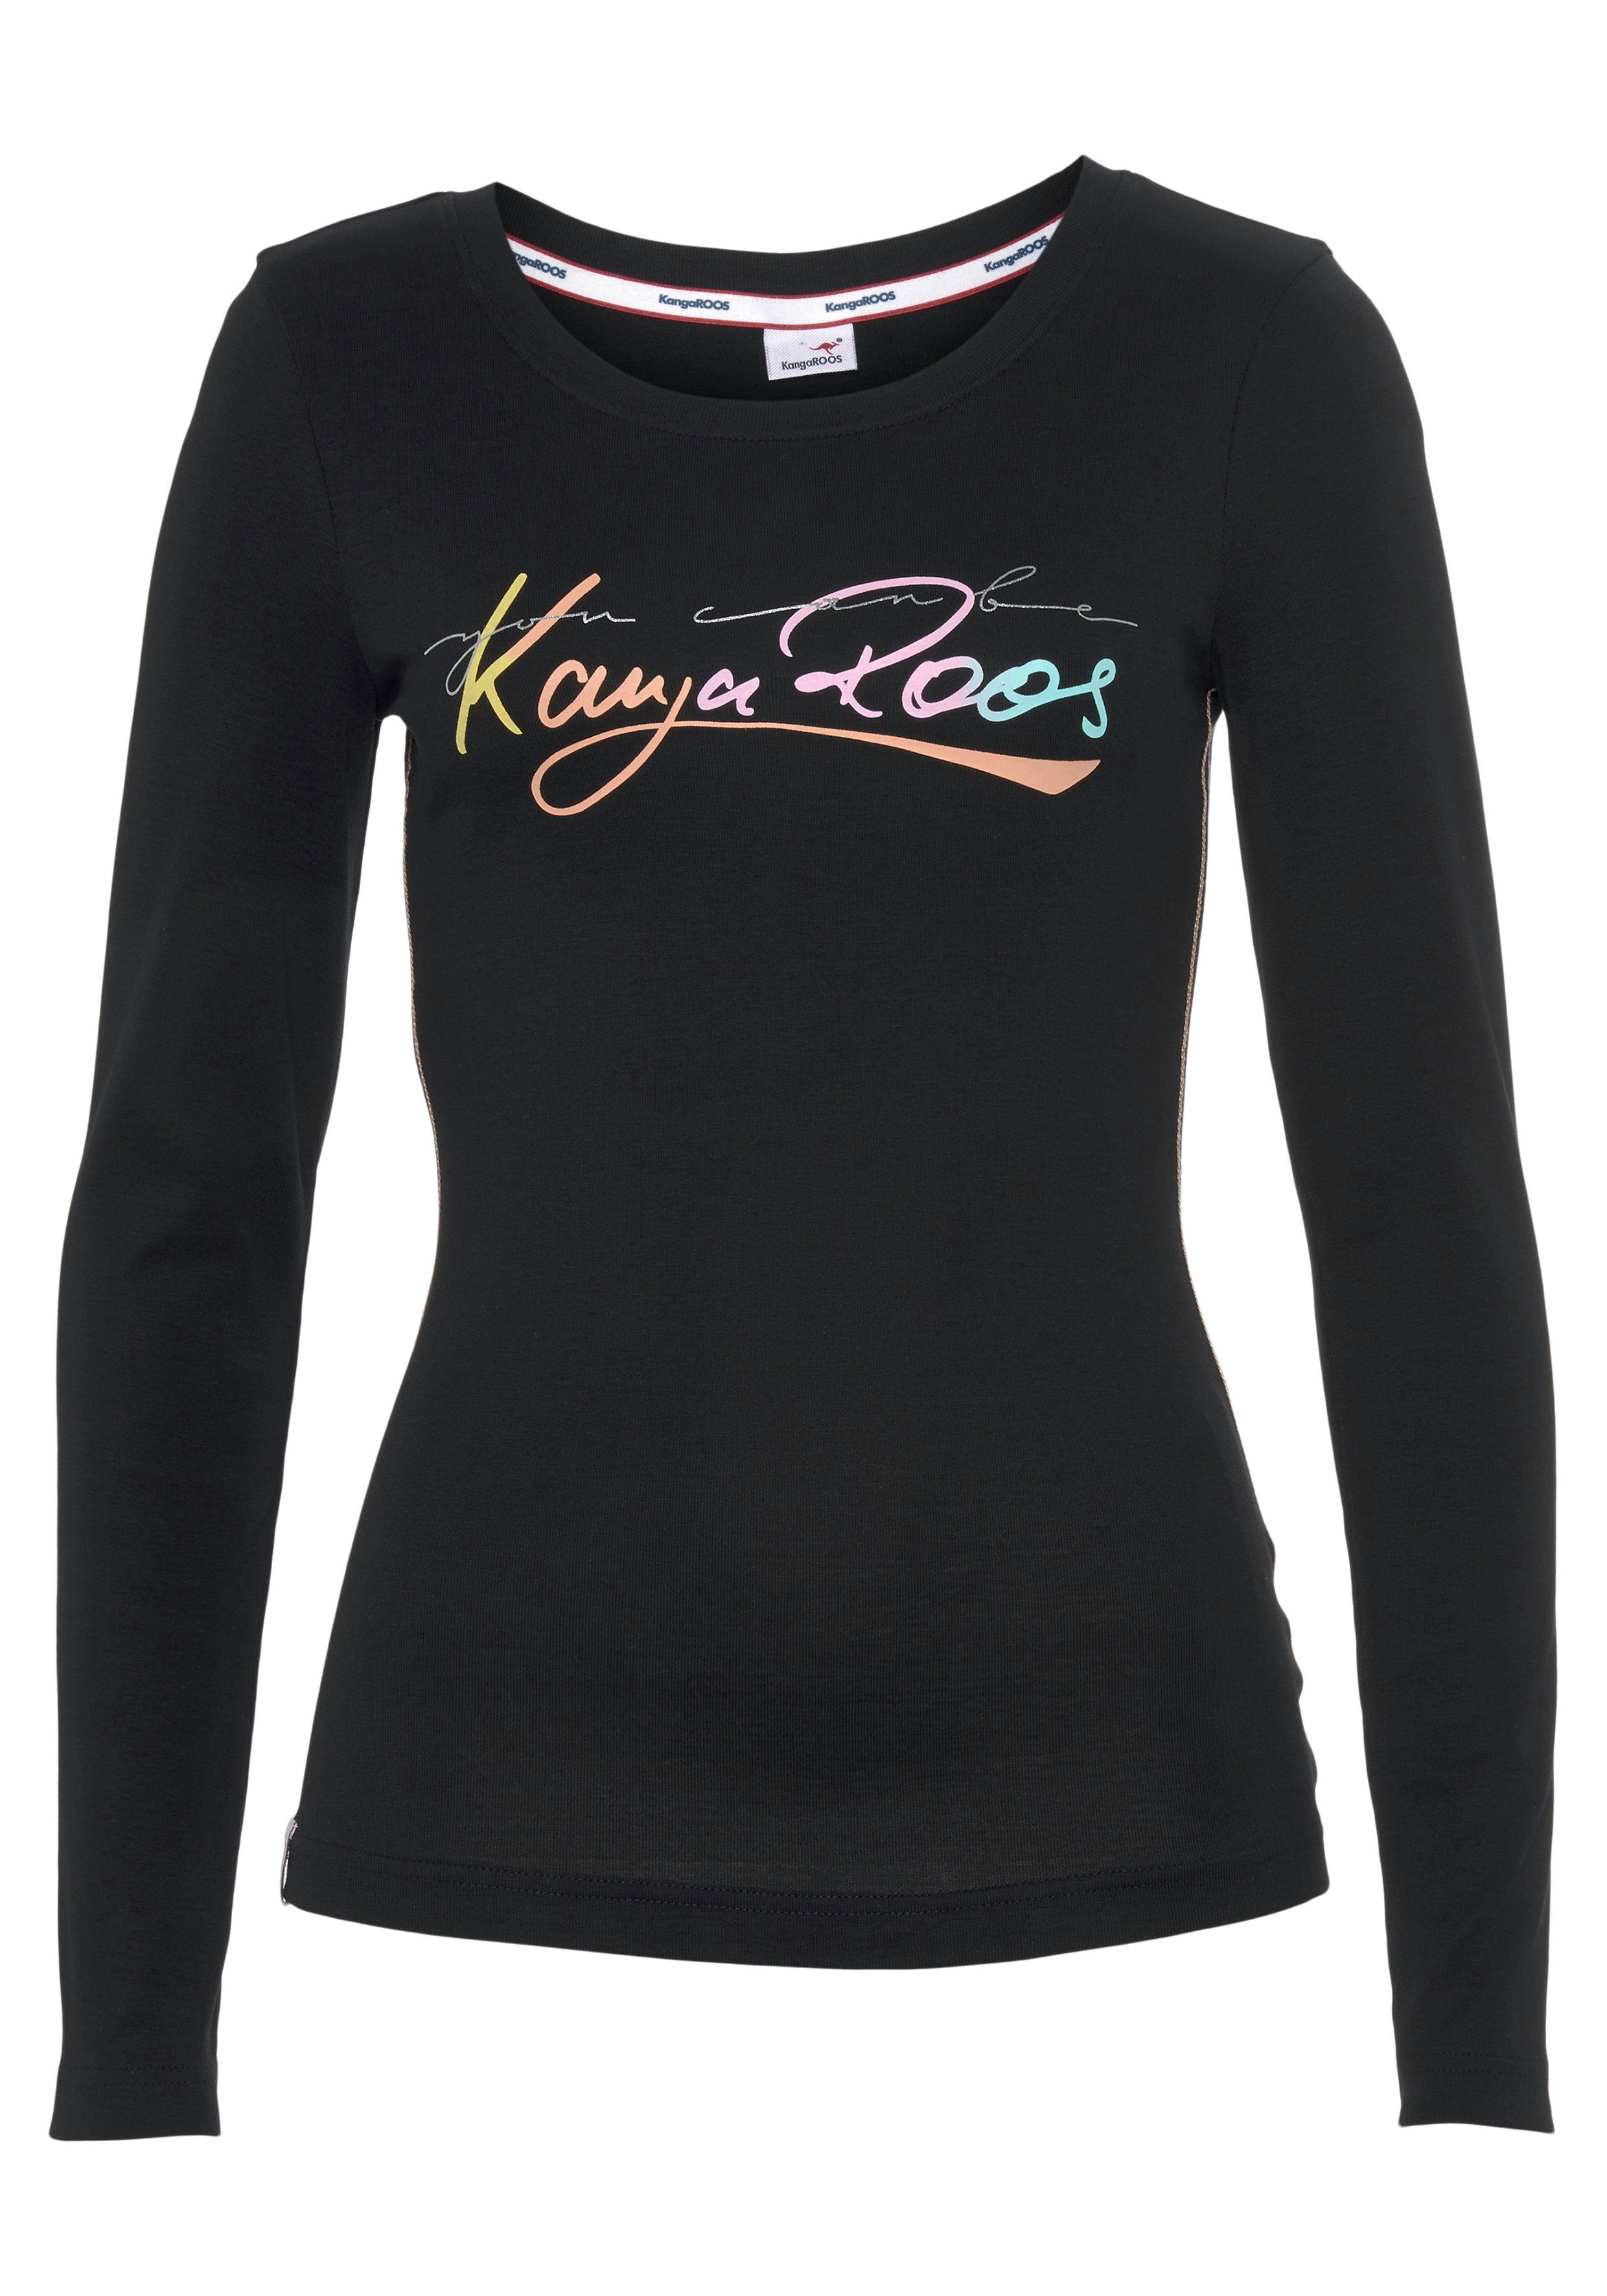 KangaROOS Langarmshirt mit schwarz farbigen KOLLEKTION Logoschriftzug trendig - NEUE